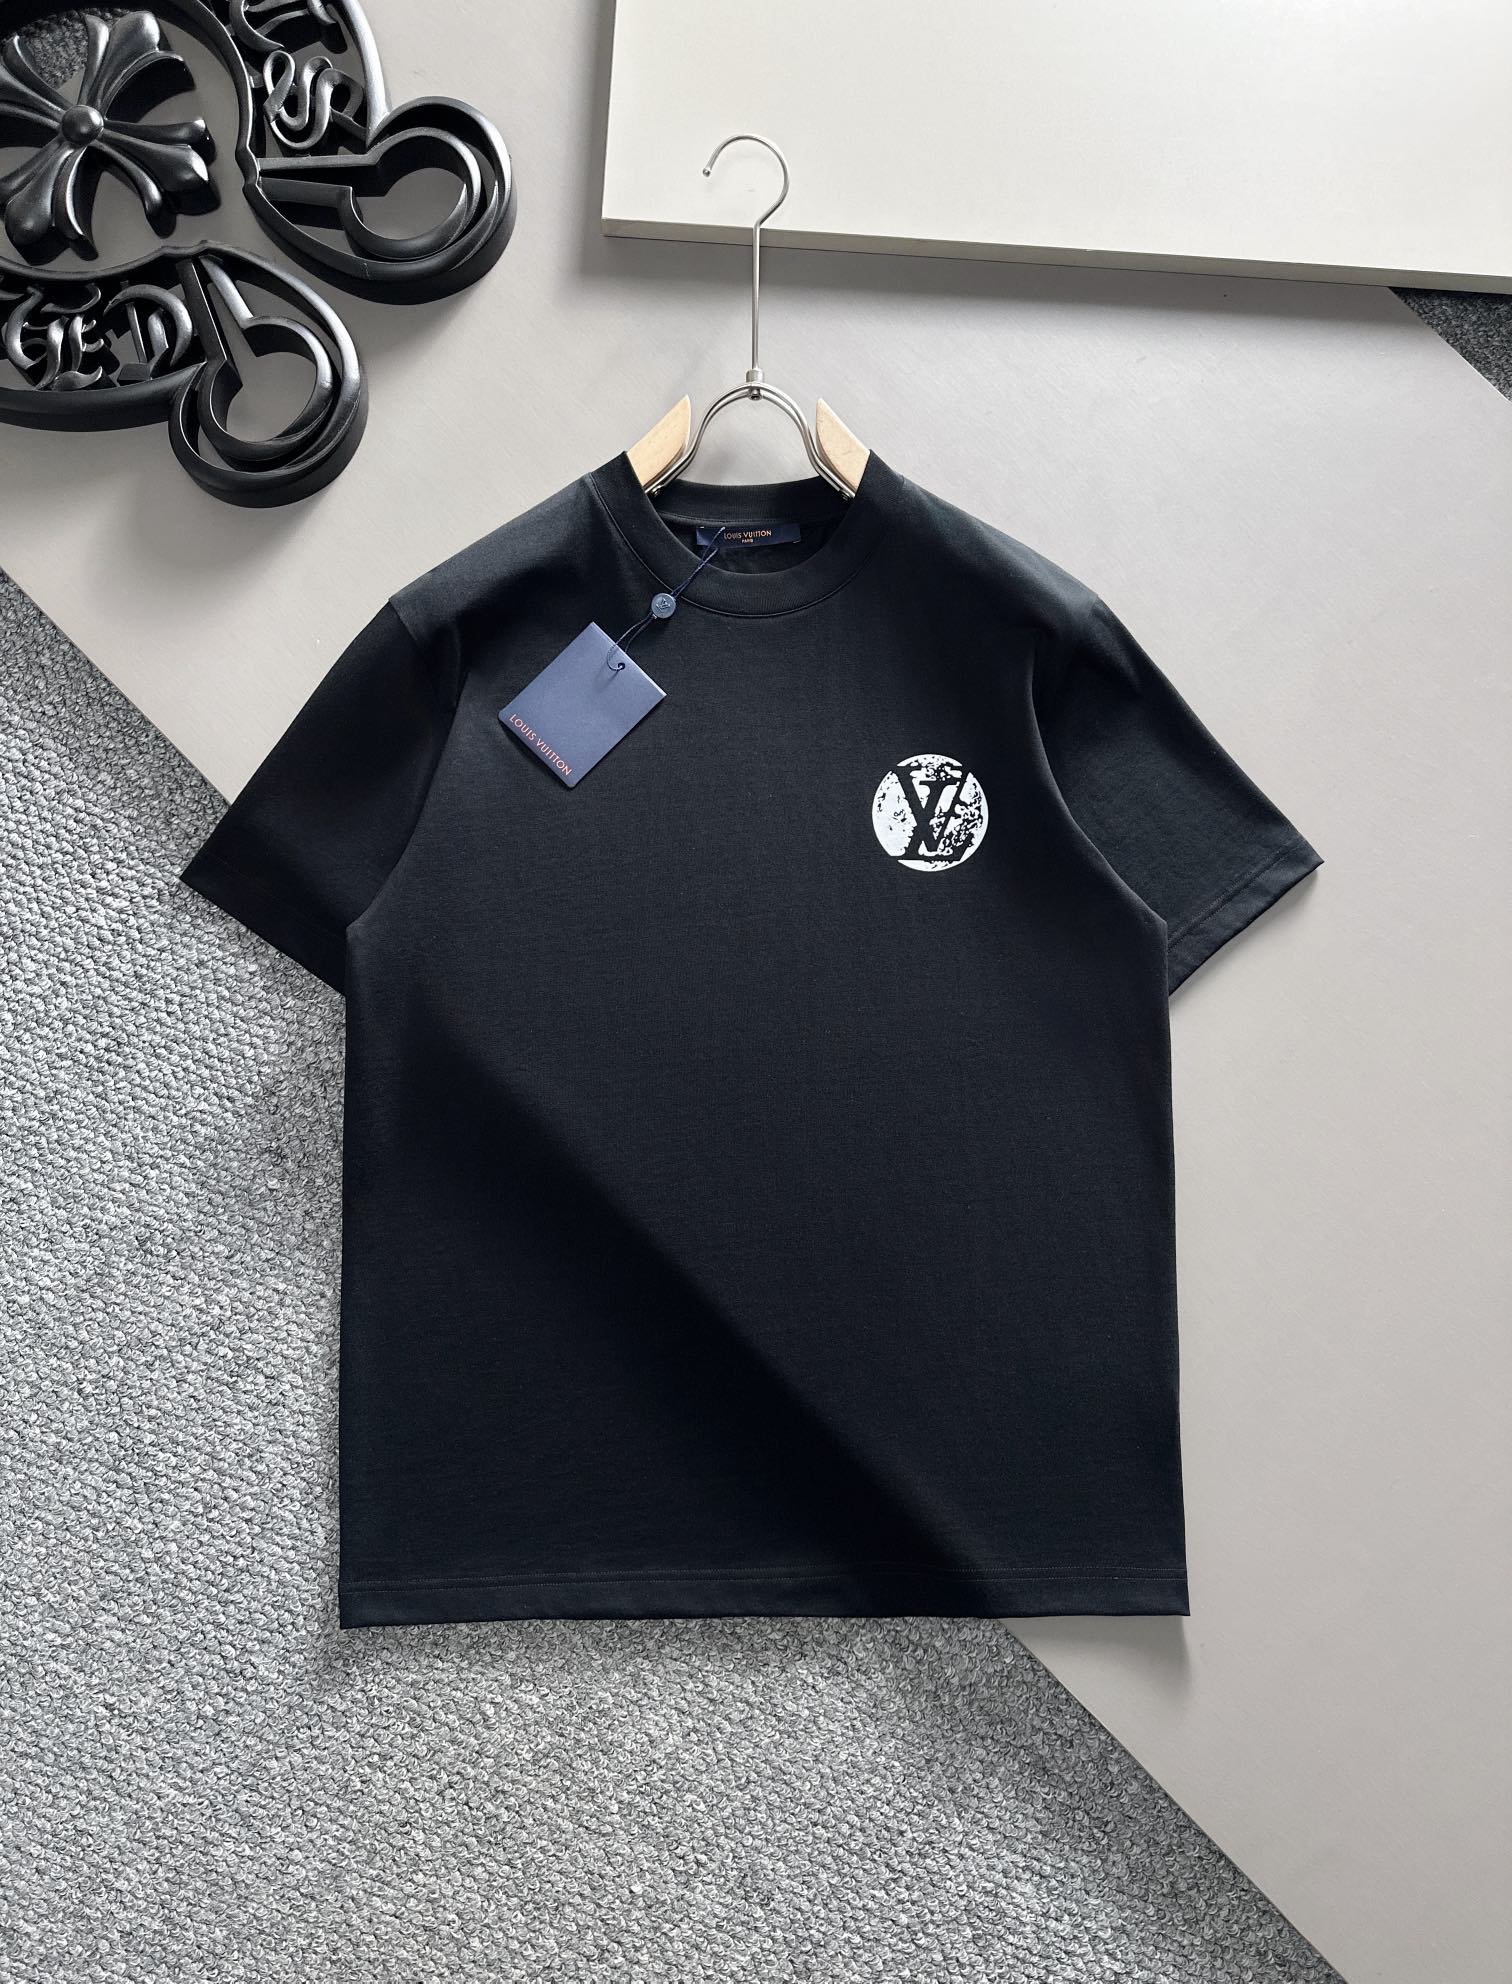 LV2024Ss最新款短袖T恤原标定制面料手感柔软穿着舒适做工精细.上身效果无敌帅气码数S-2xl